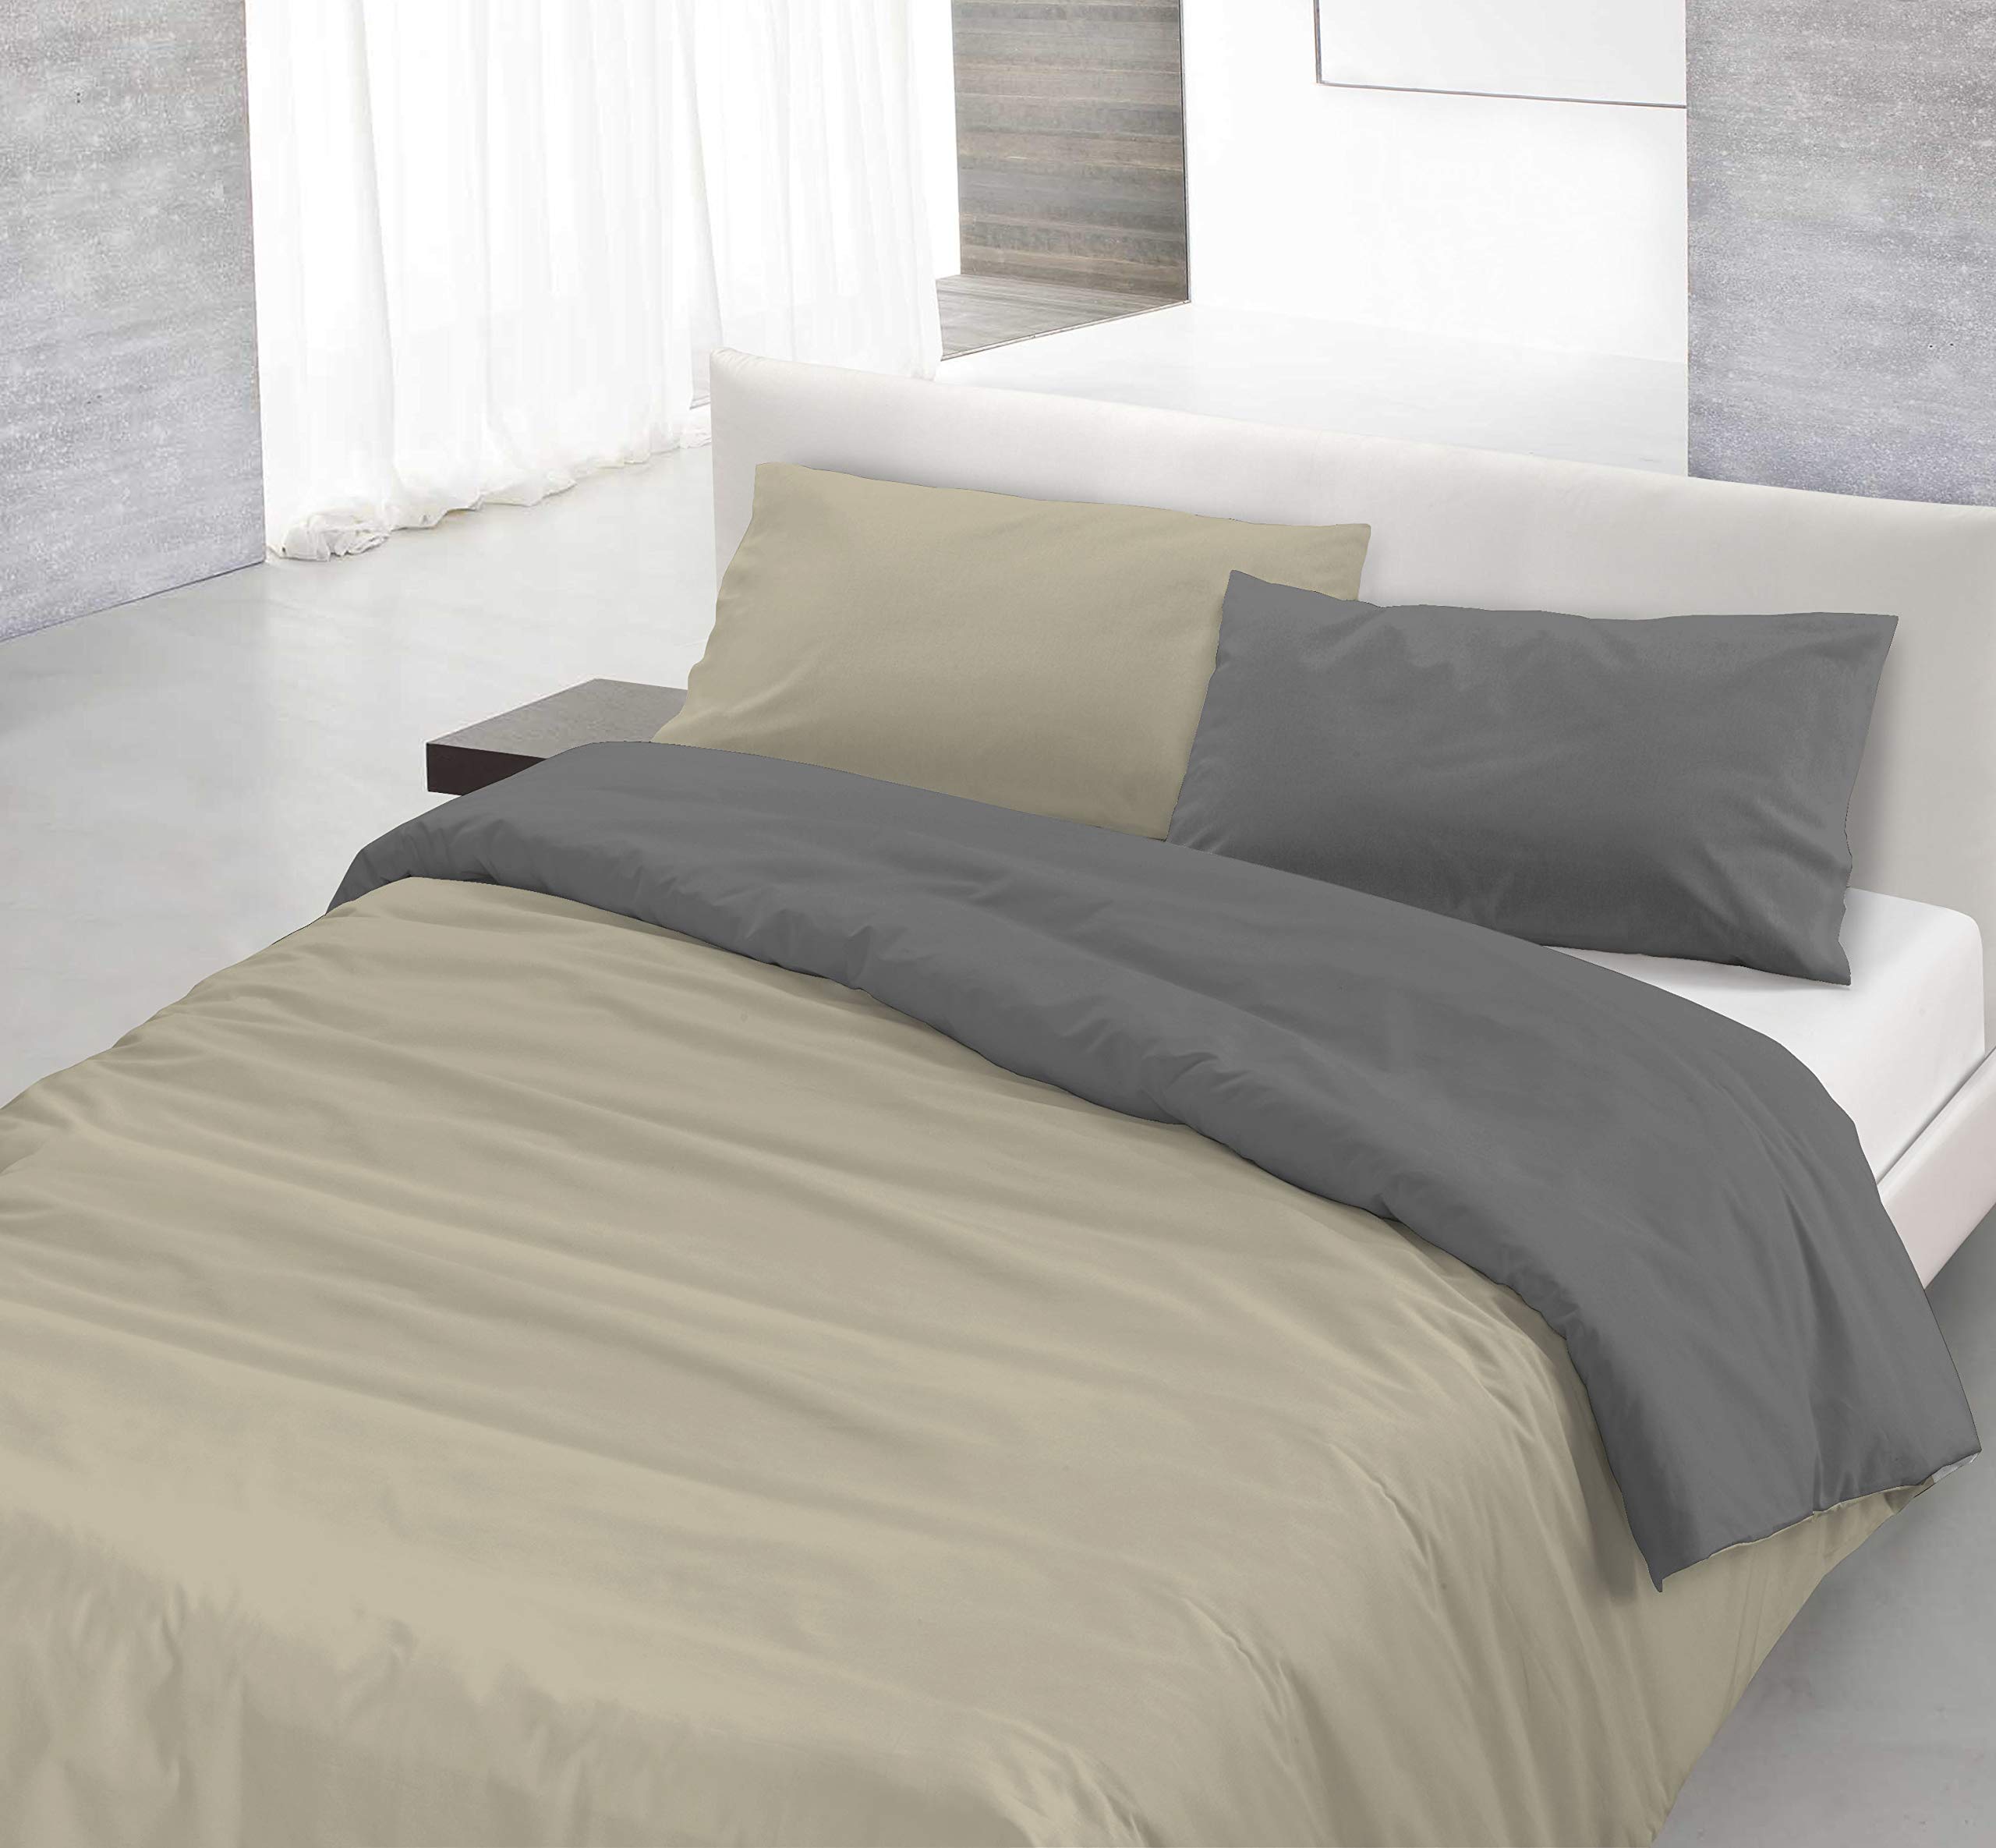 Italian Bed Linen Natural Color Doubleface Bettbezug, 100% Baumwolle, Braun/Creme, Einzelne